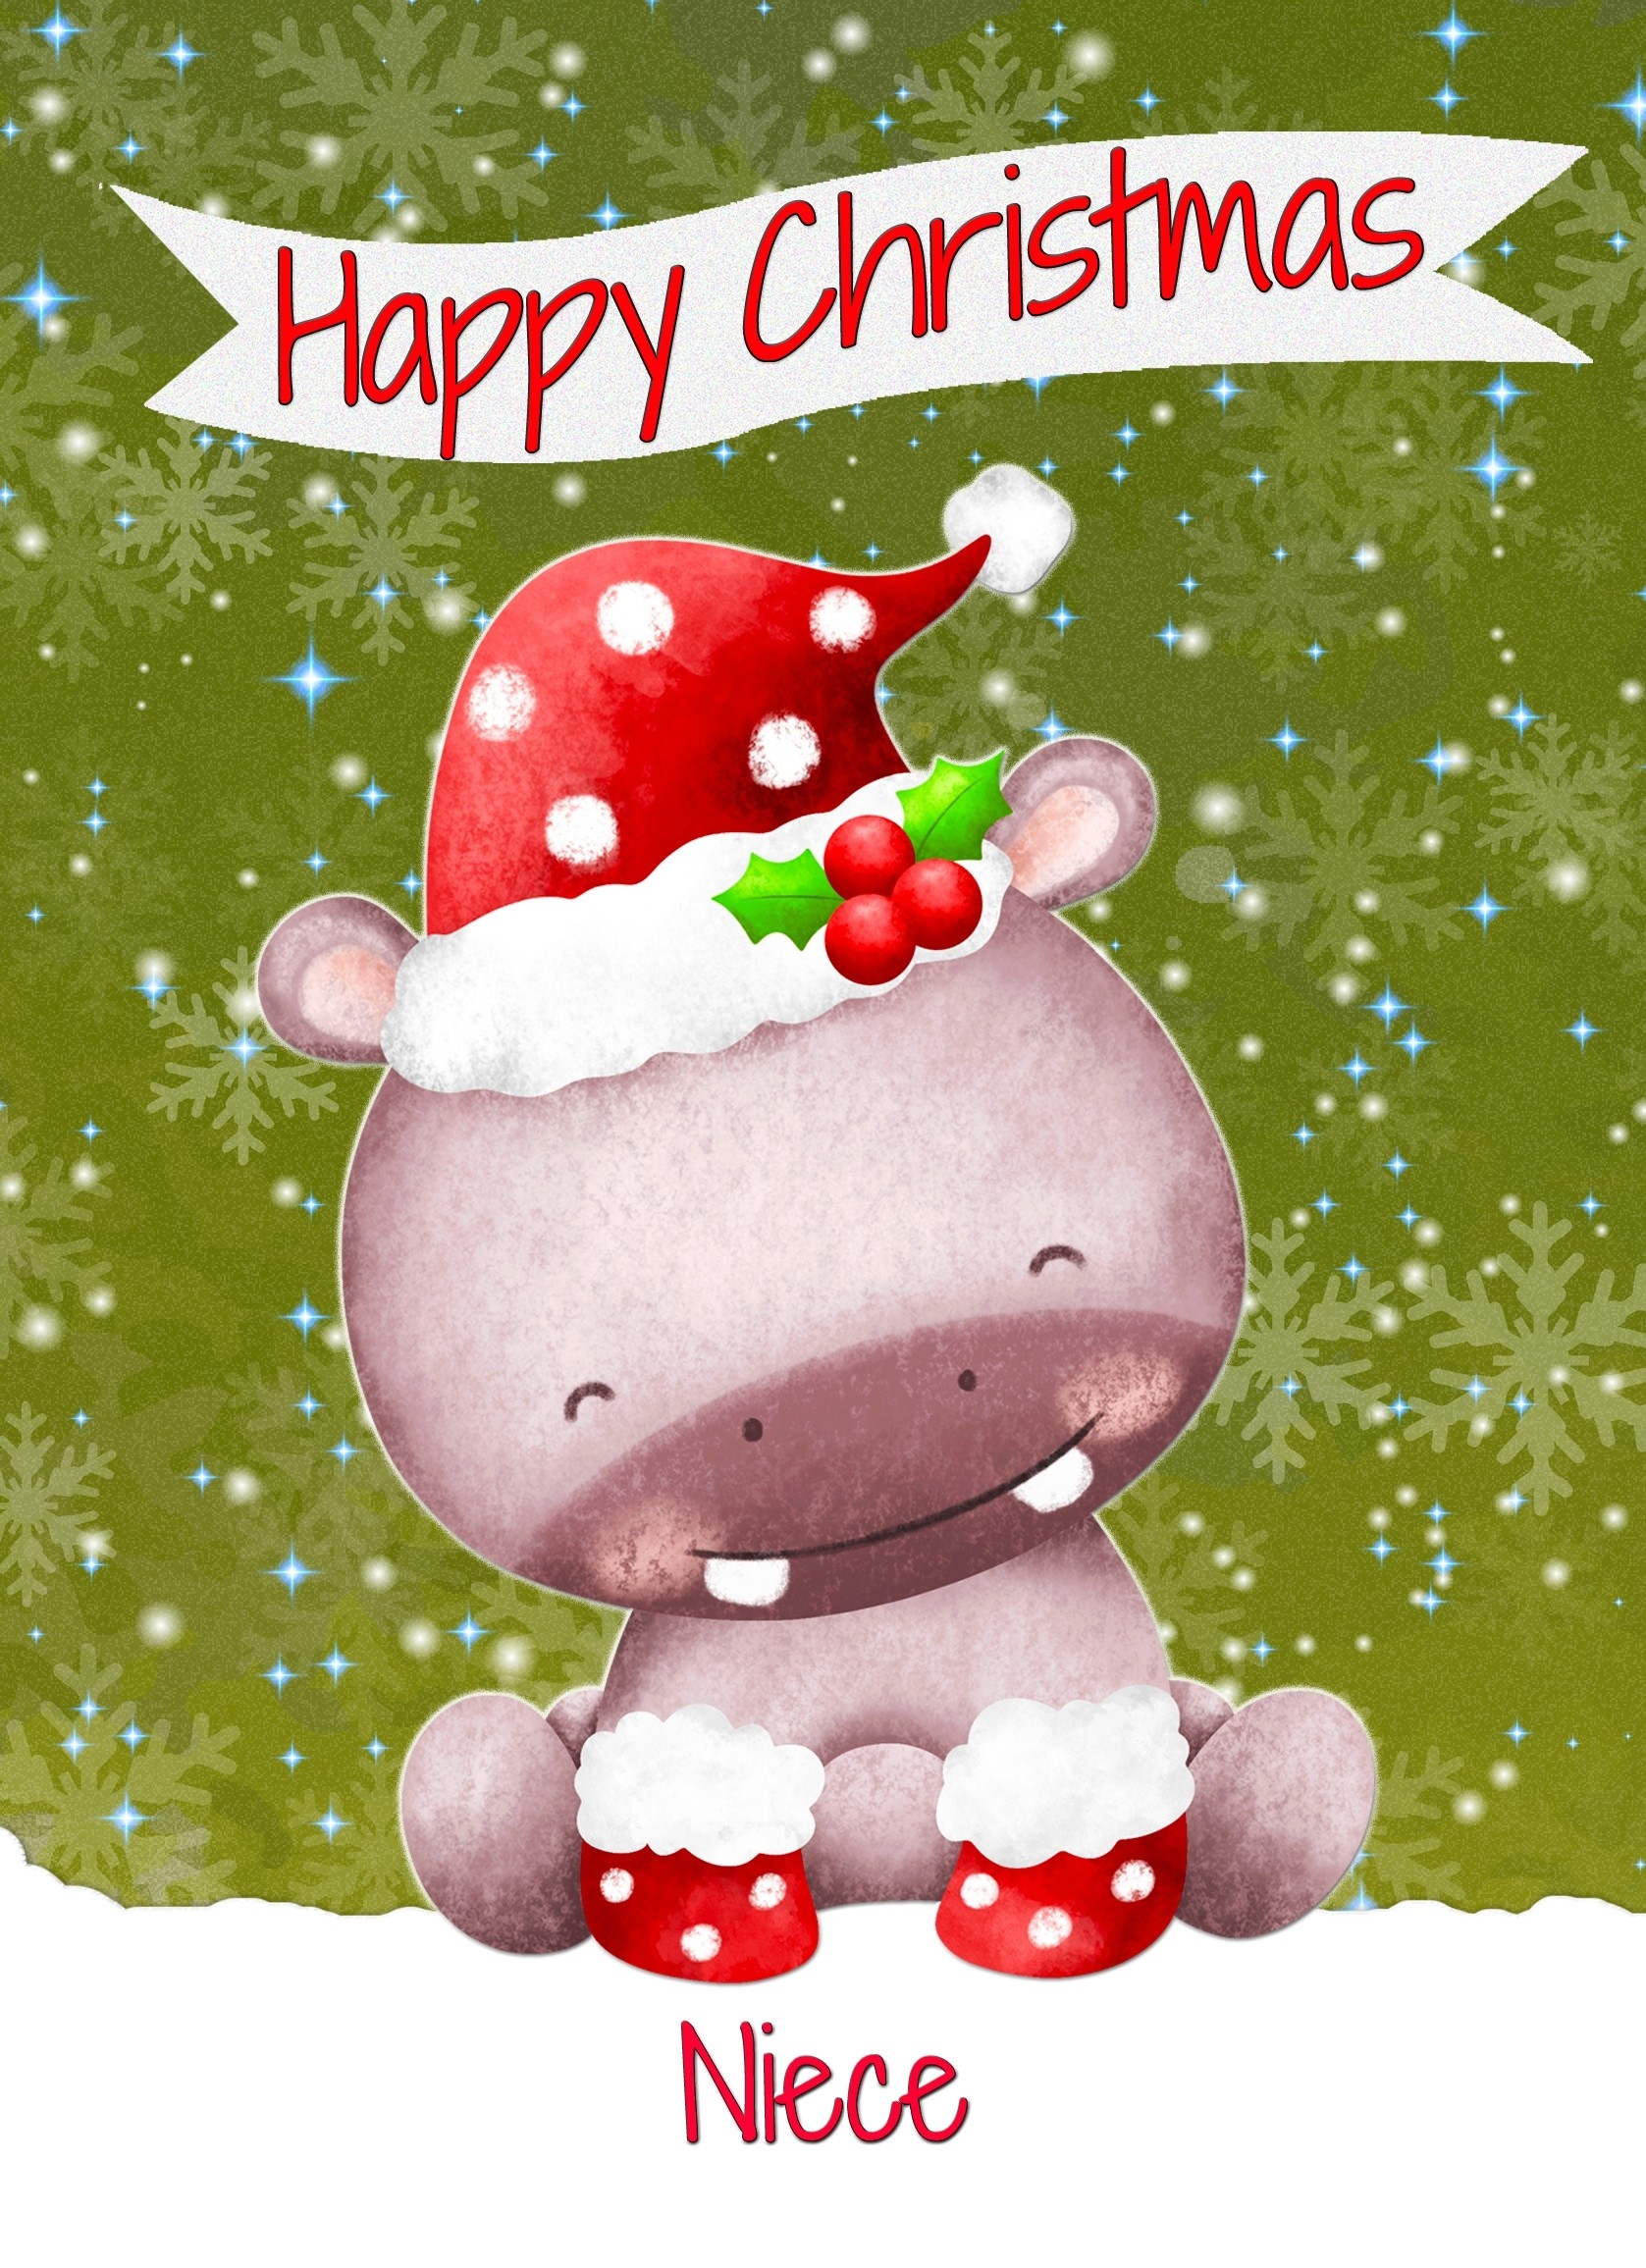 Christmas Card For Niece (Happy Christmas, Hippo)